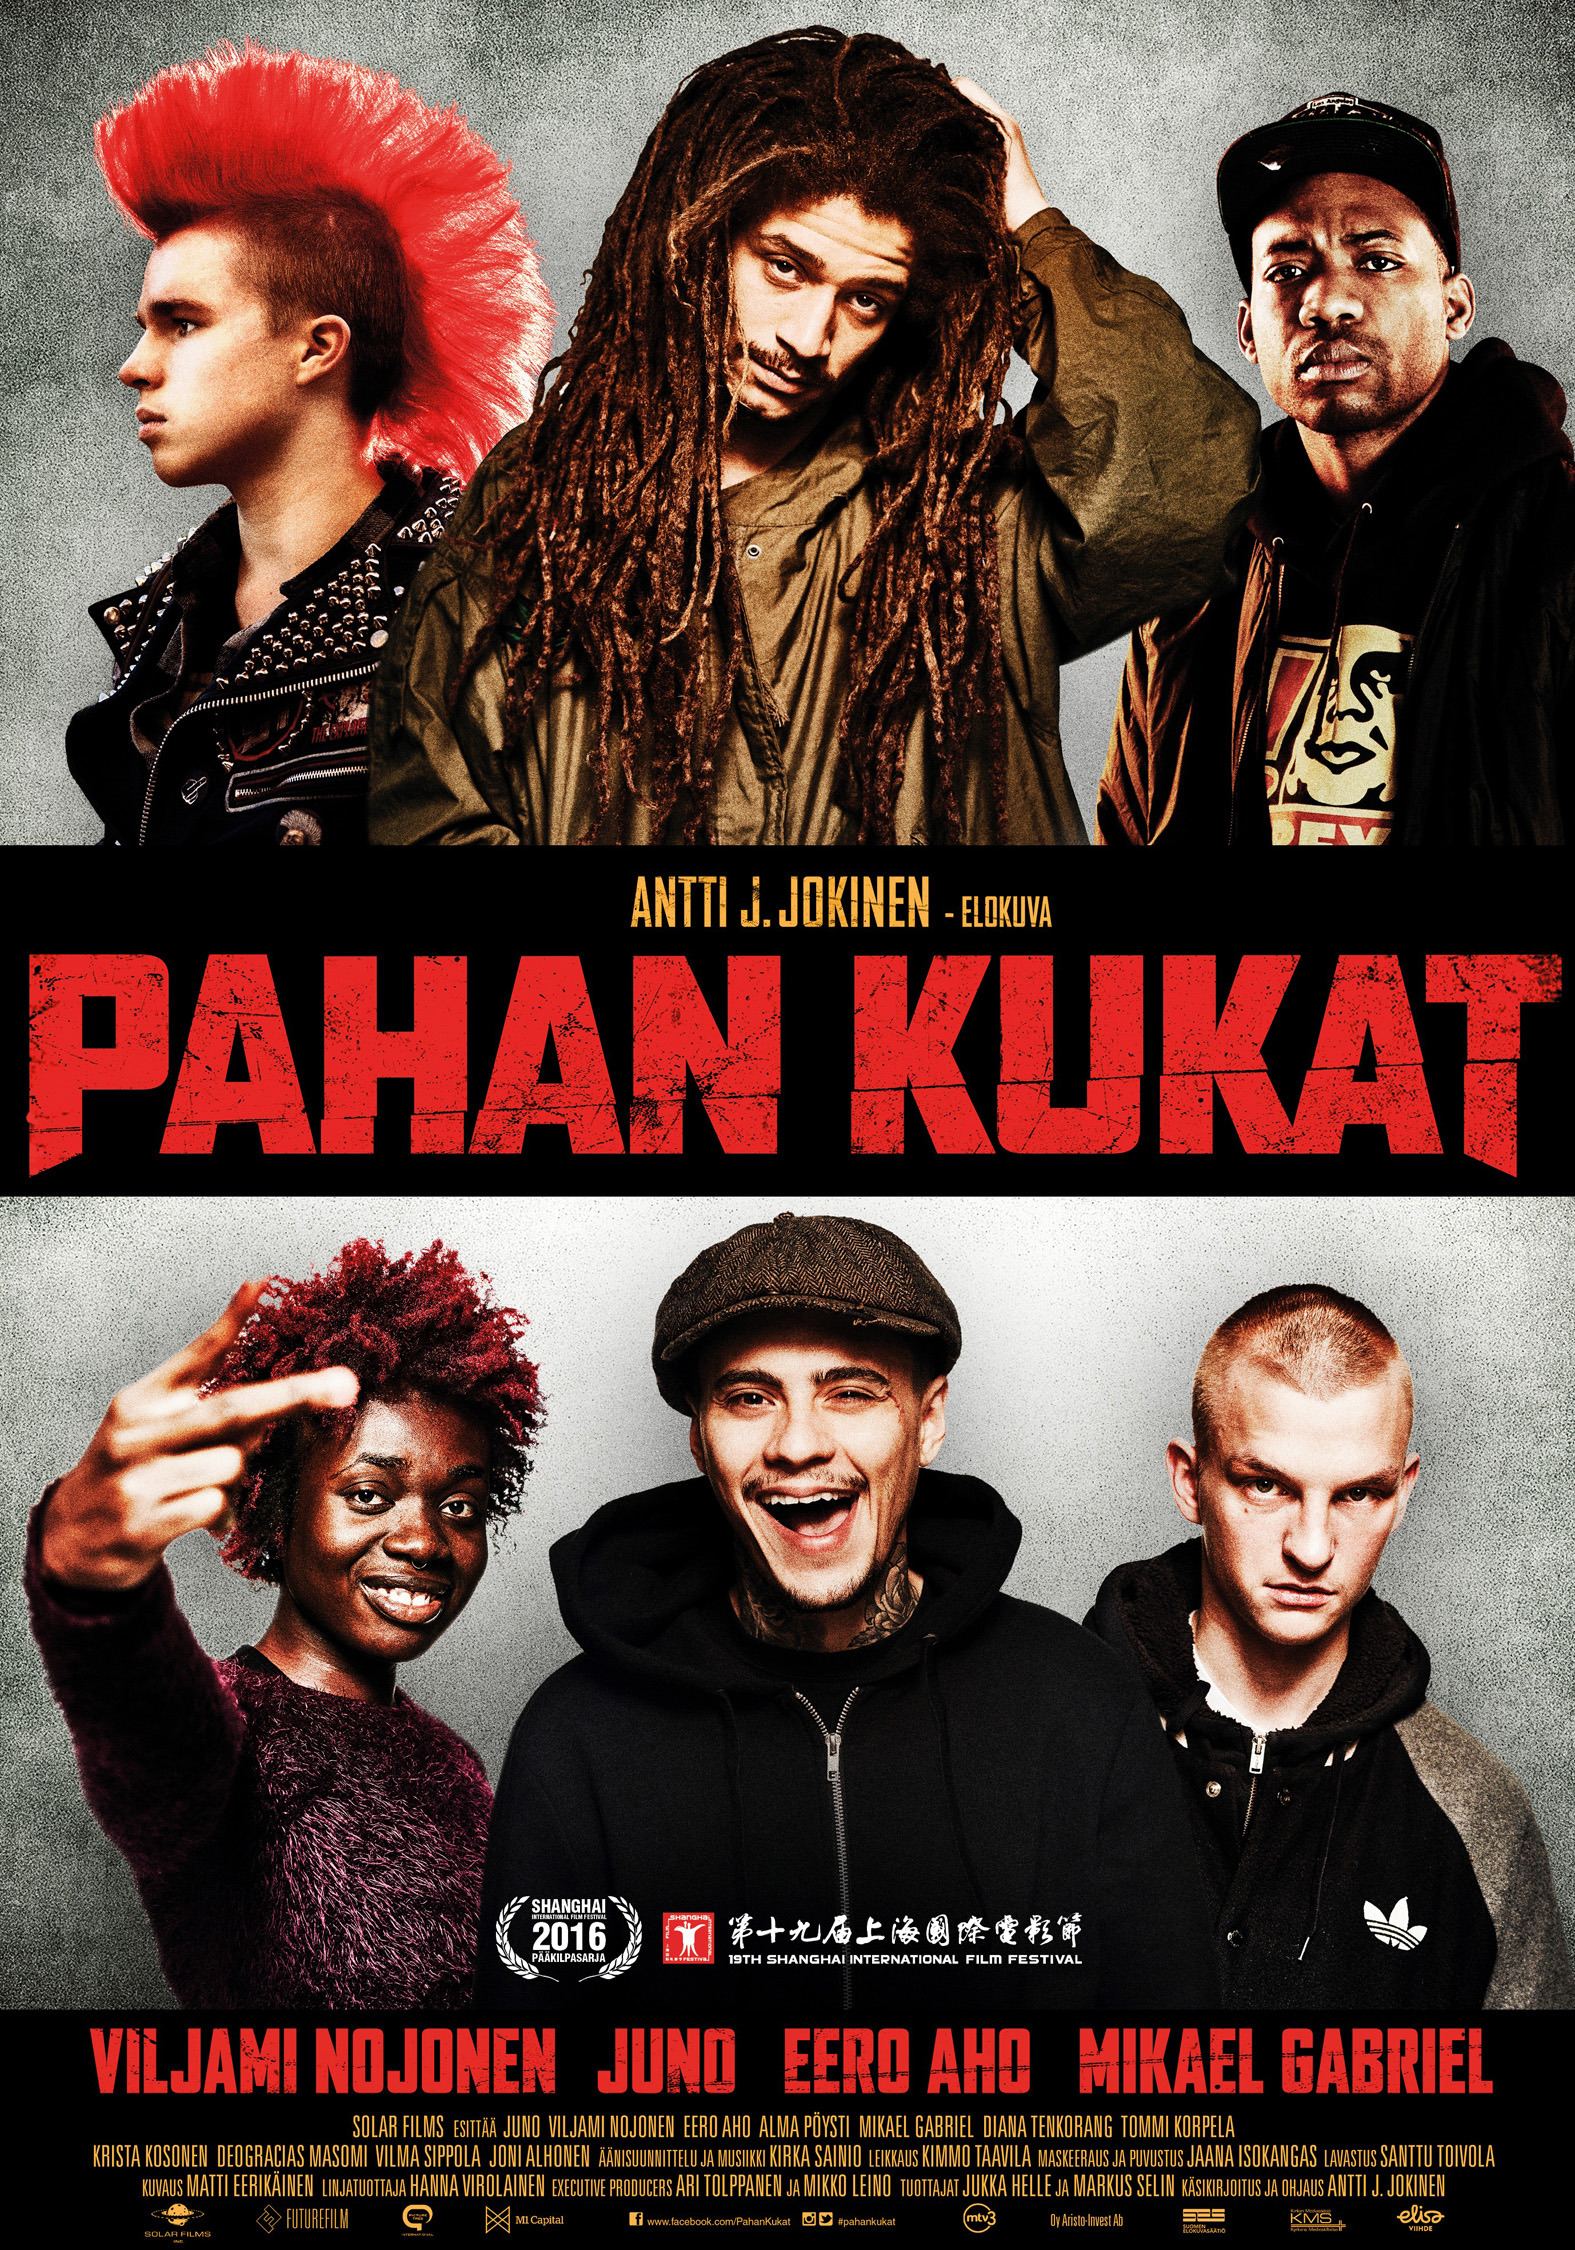 Mega Sized Movie Poster Image for Pahan kukat 